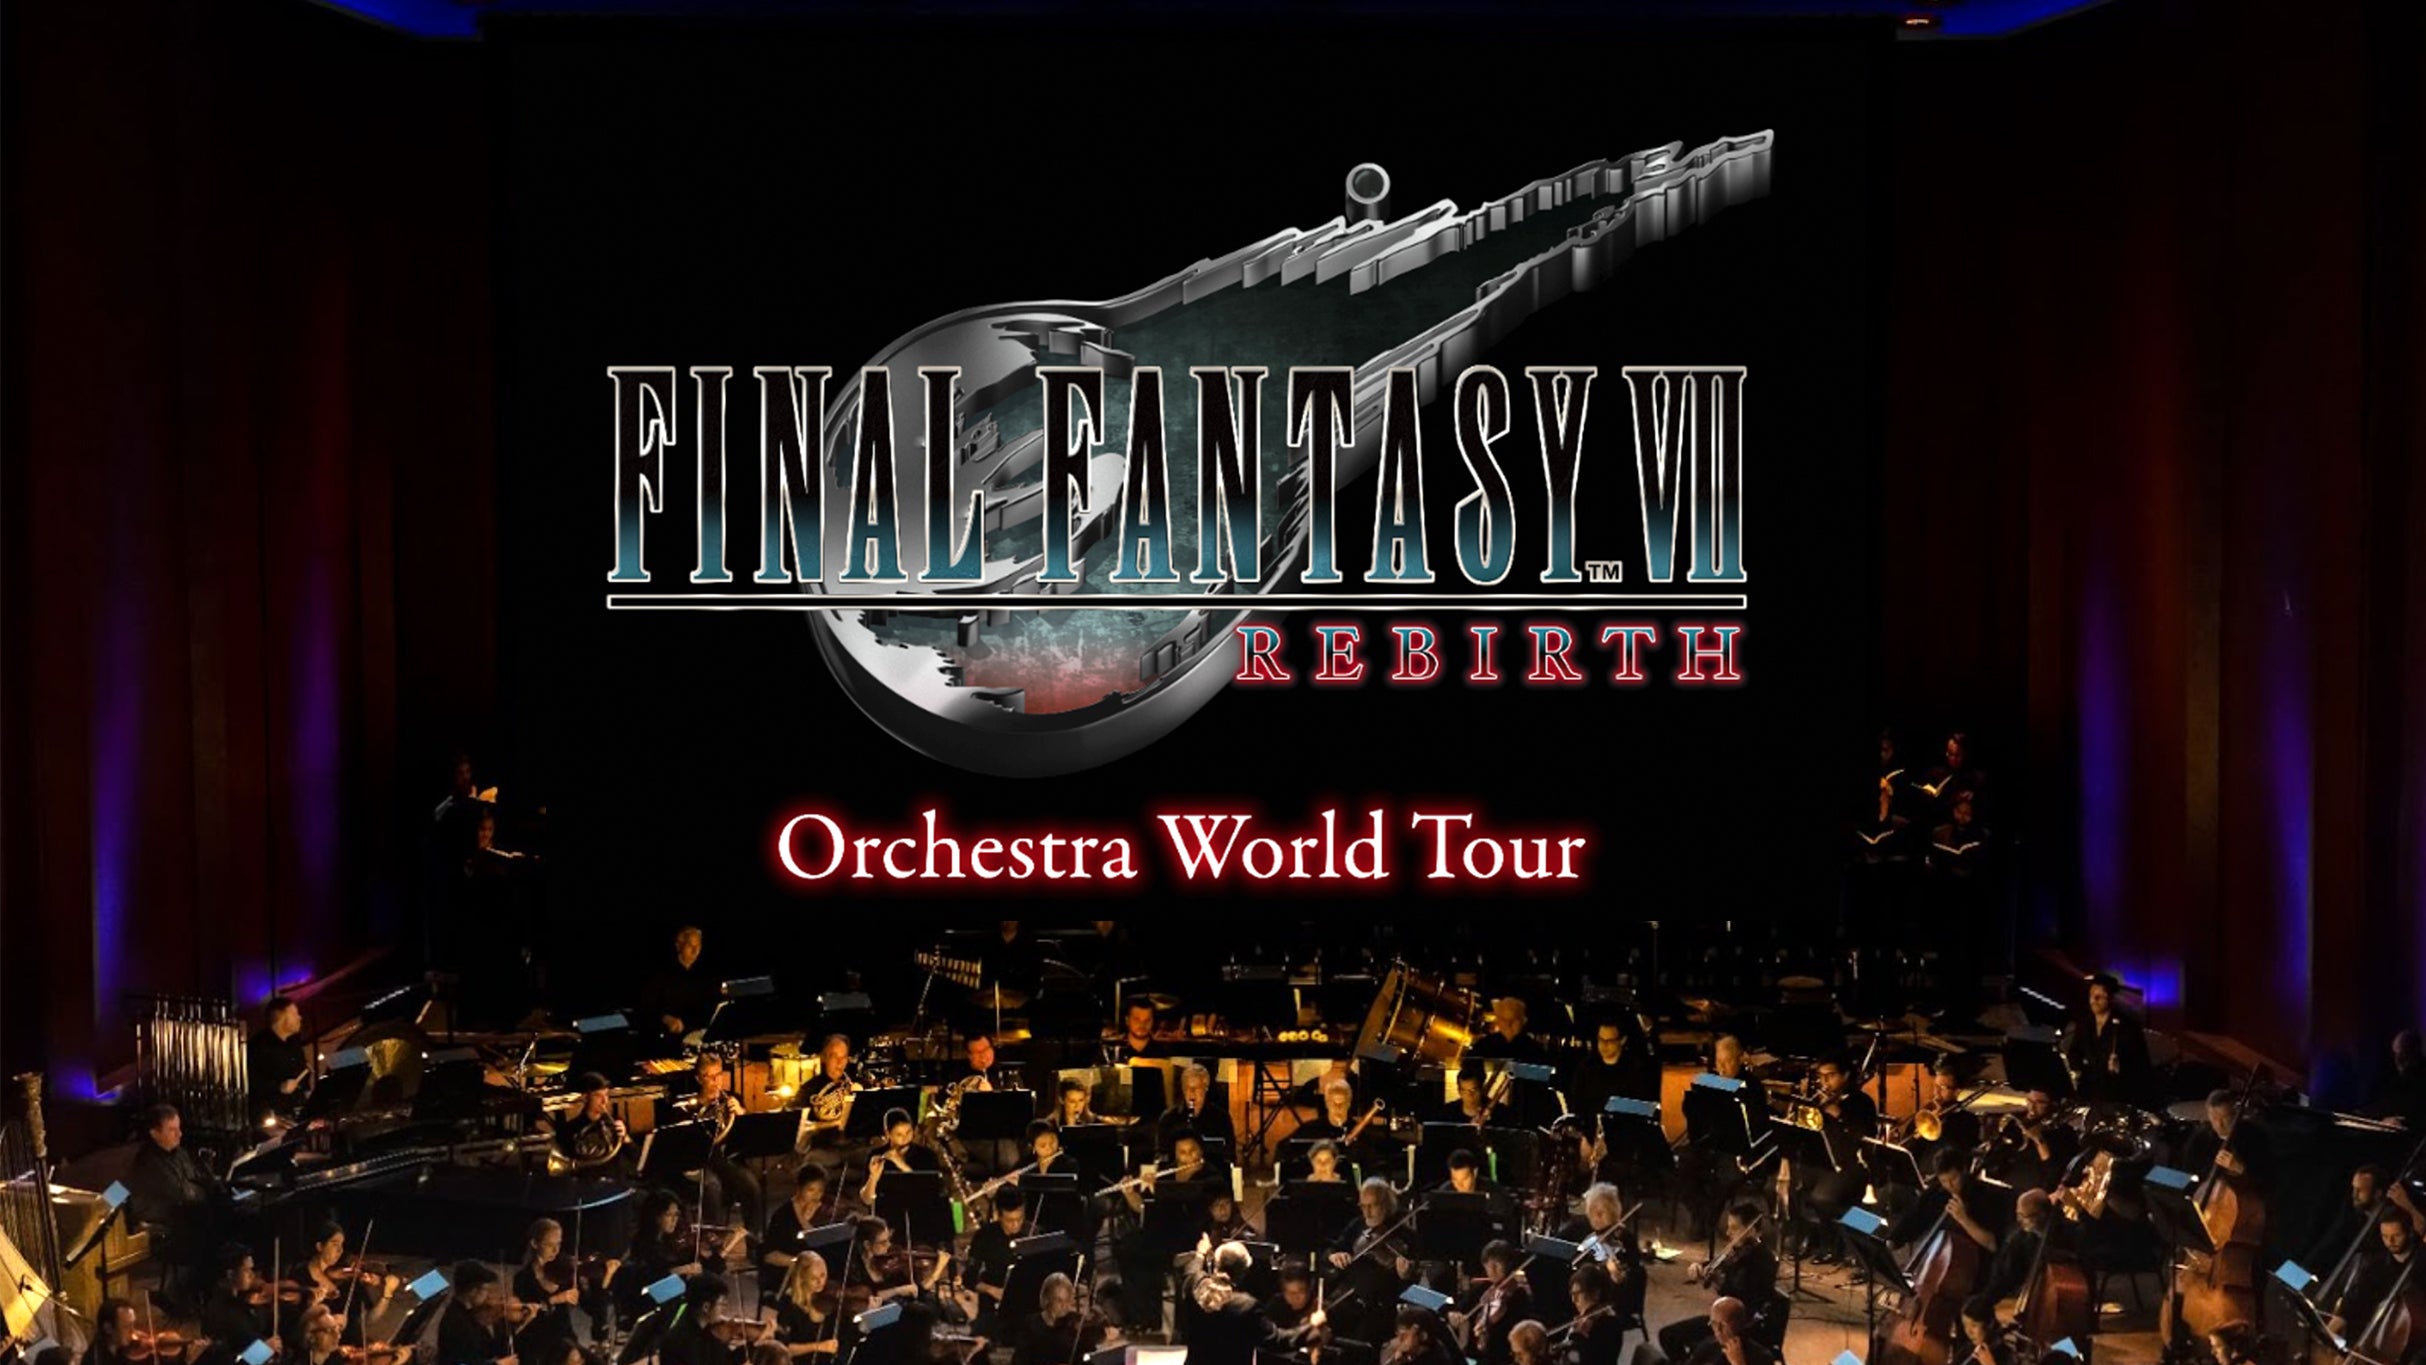 FINAL FANTASY VII REBIRTH Orchestra World Tour at San Jose Center for the Performing Arts – San Jose, CA